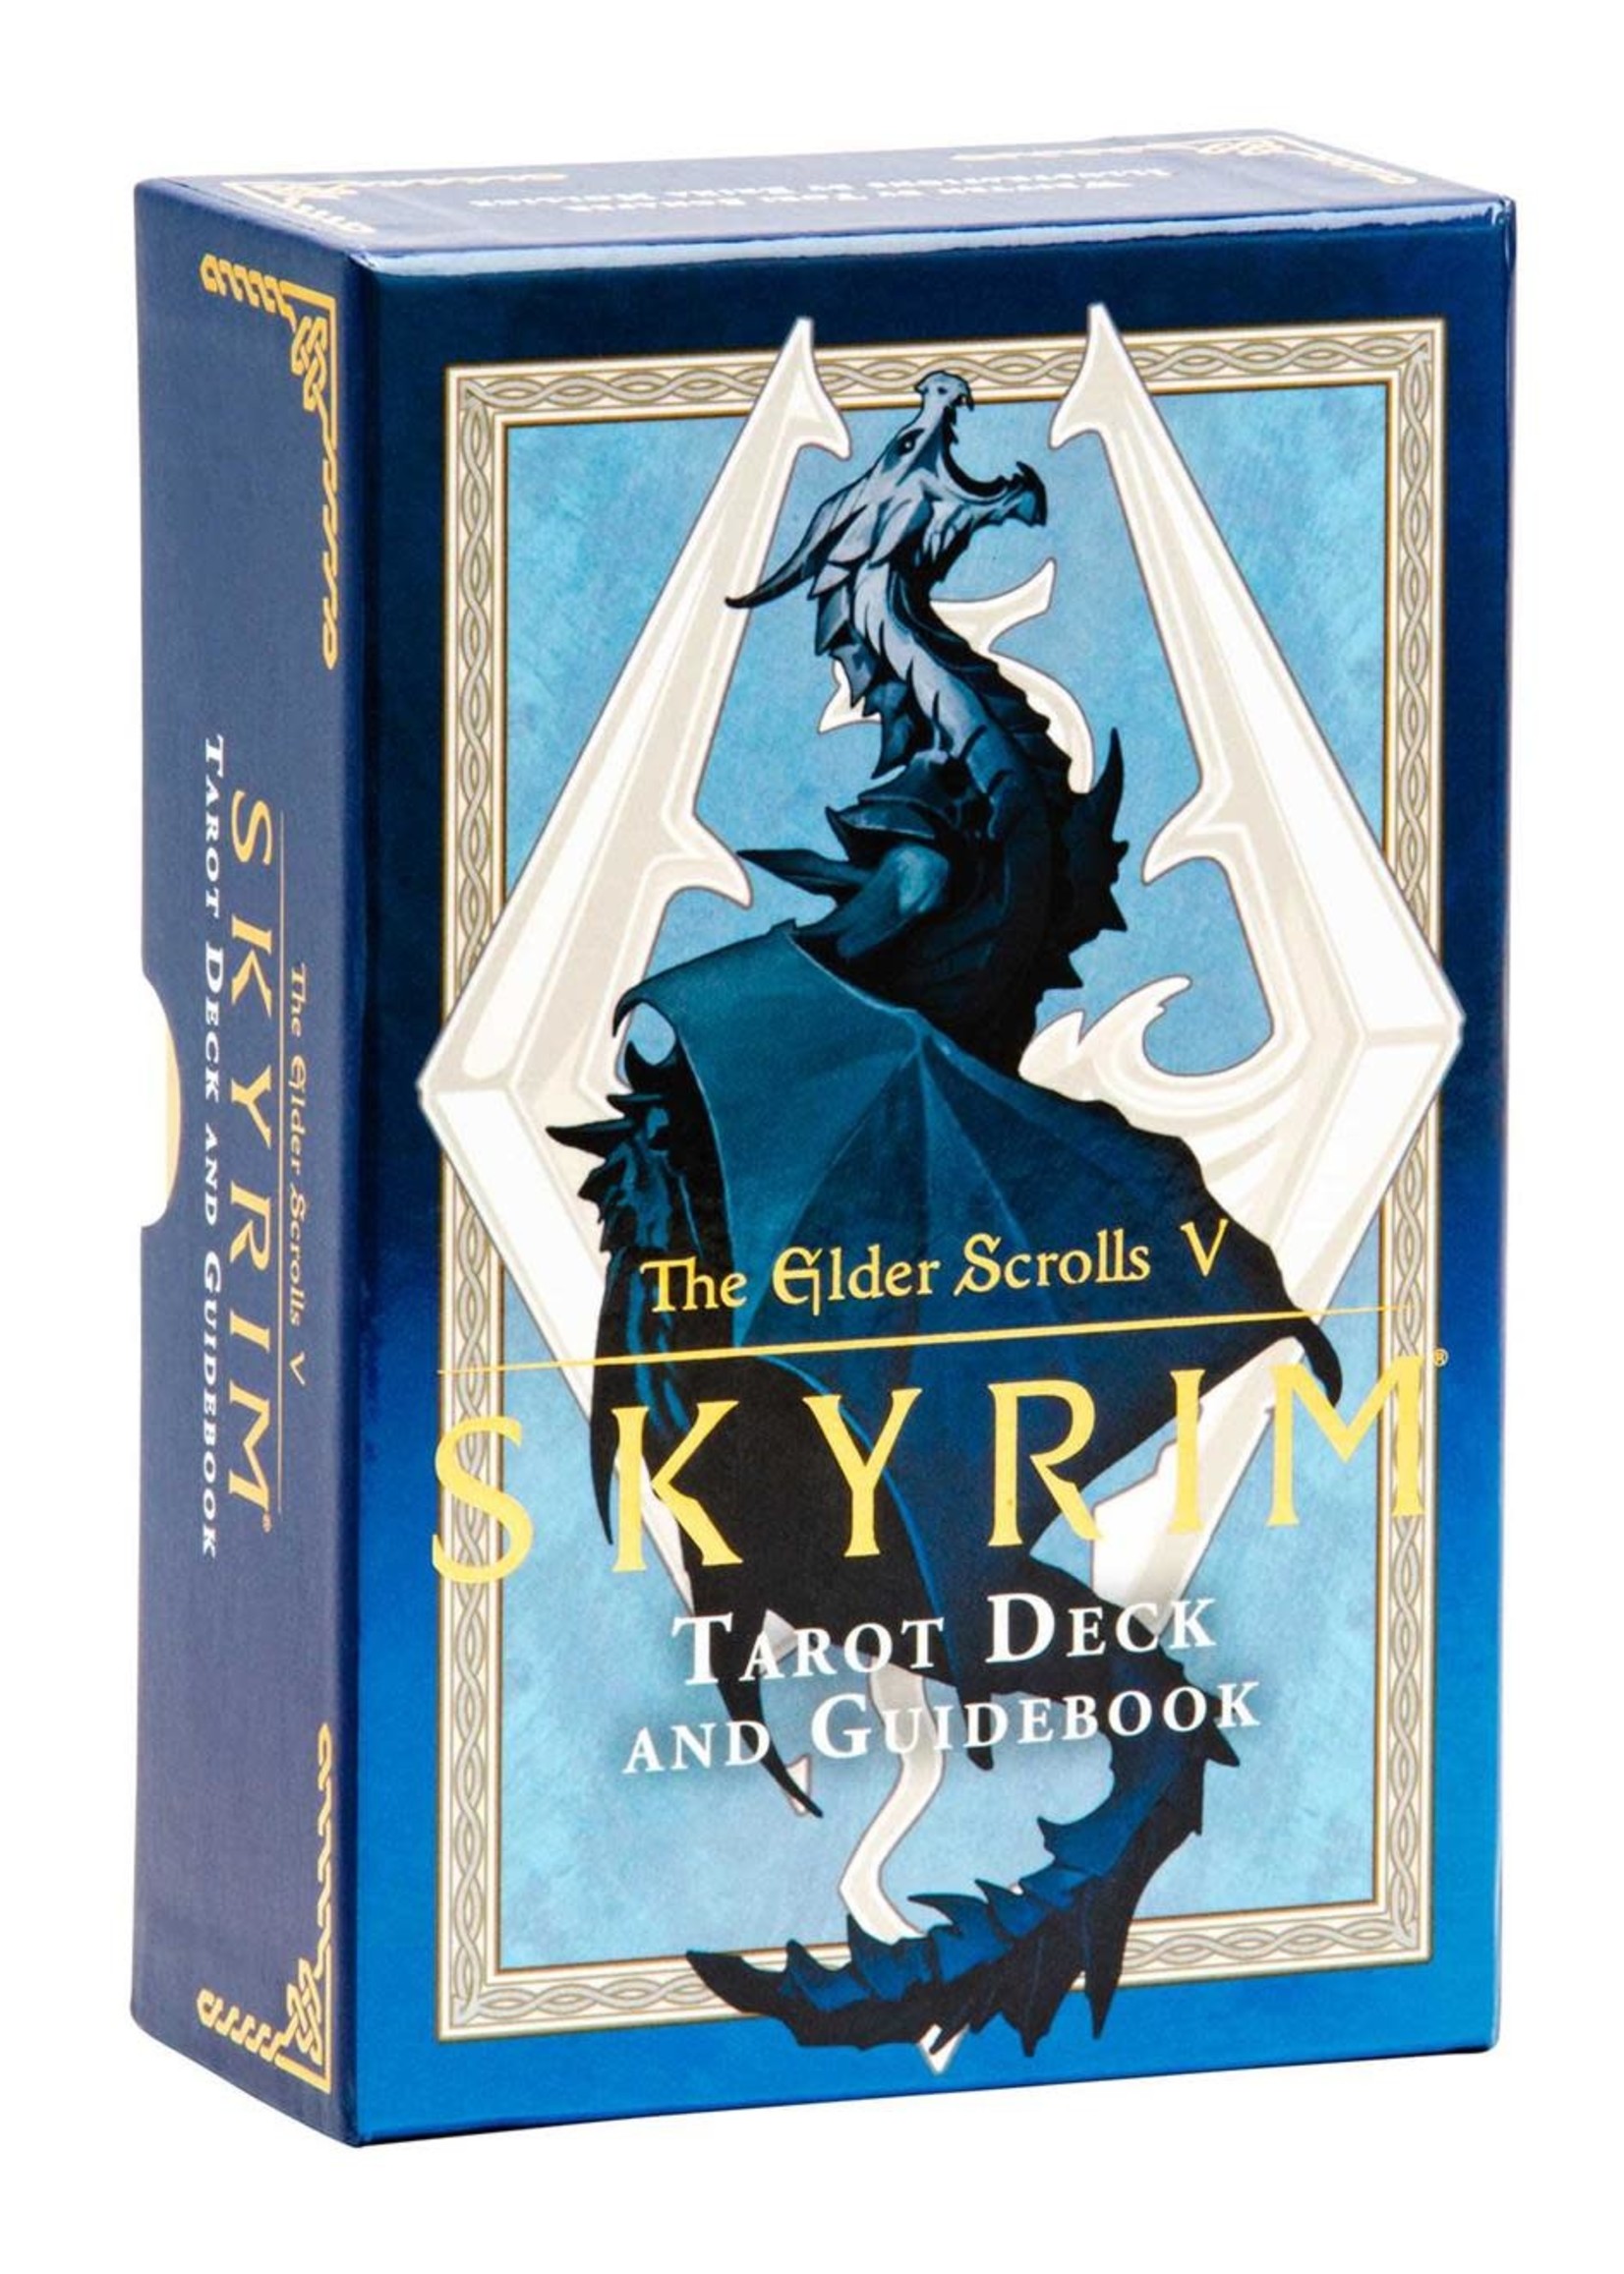 The Elder Scrolls V: Skyrim Tarot Deck and Guidebook by Tori Schafer